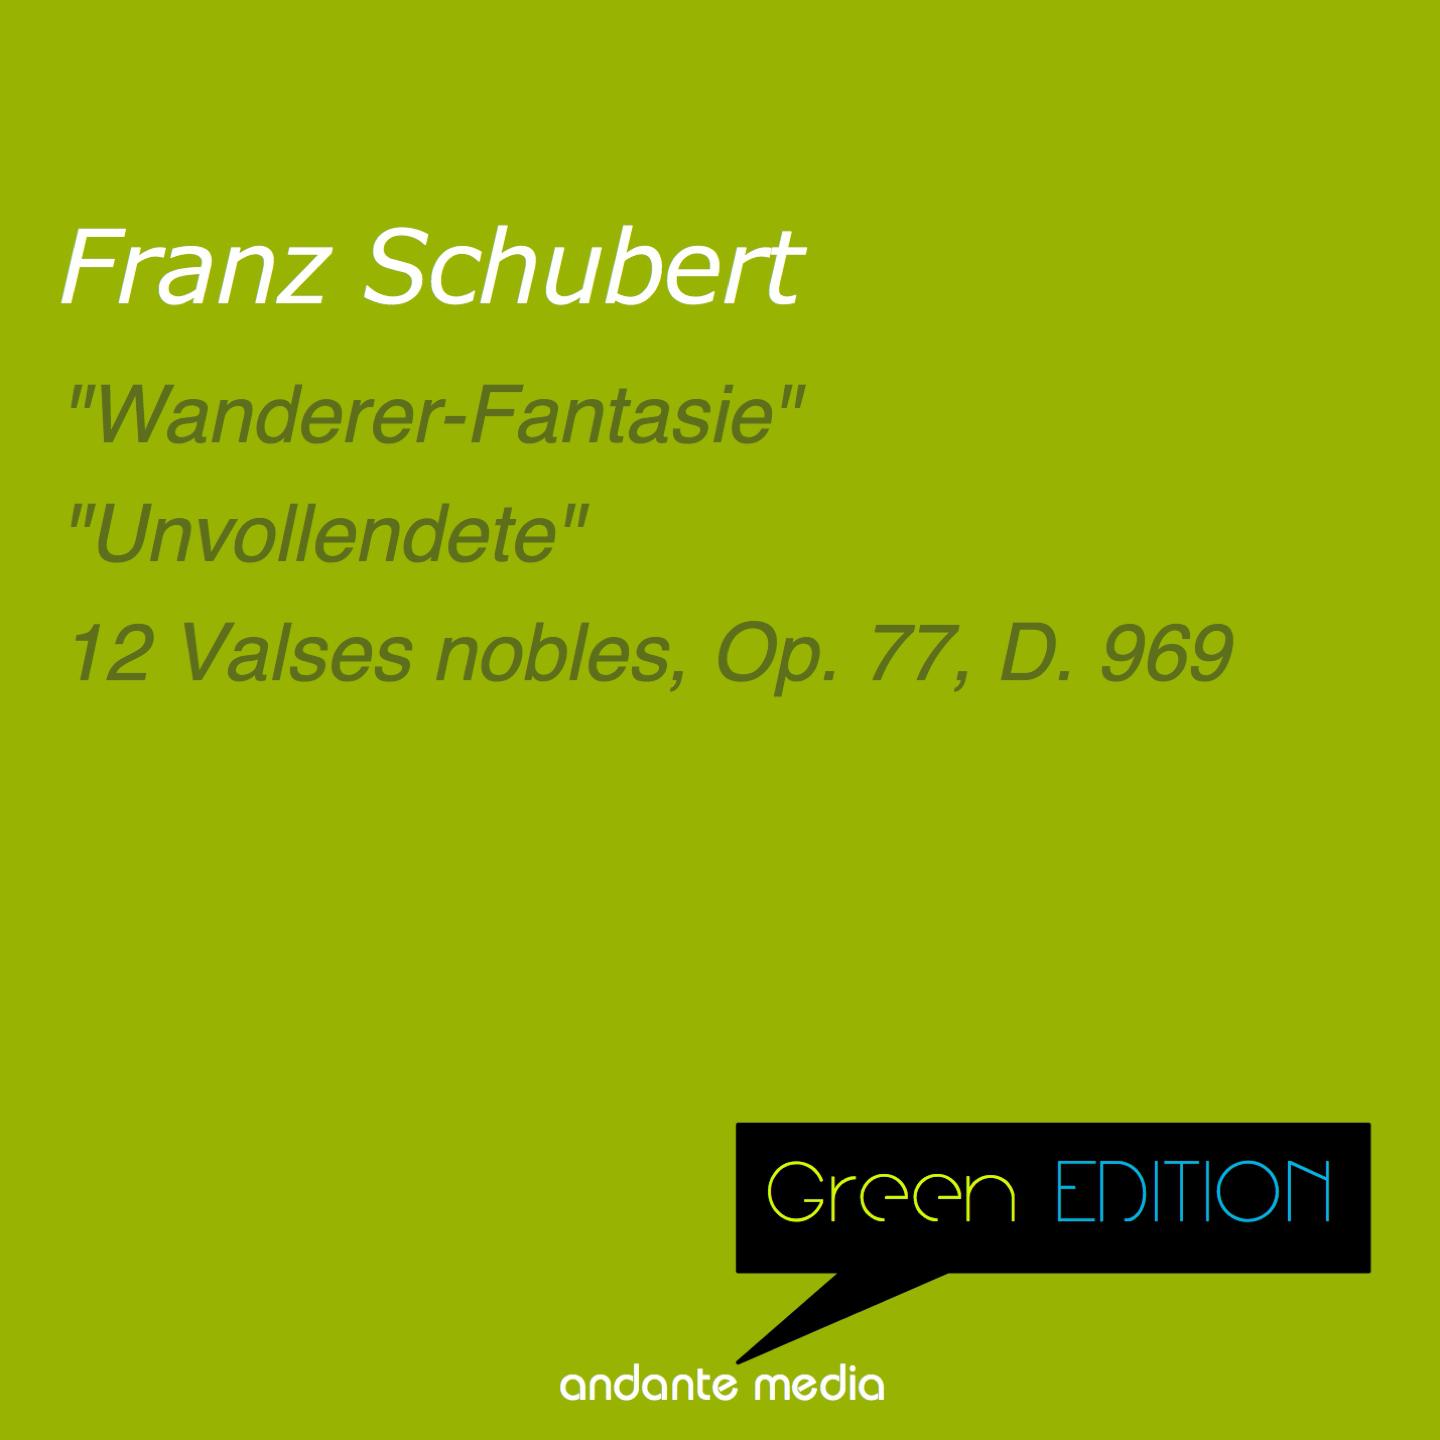 Green Edition - Schubert: "Wanderer-Fantasie" & Symphony No. 8 "Unvollendete"